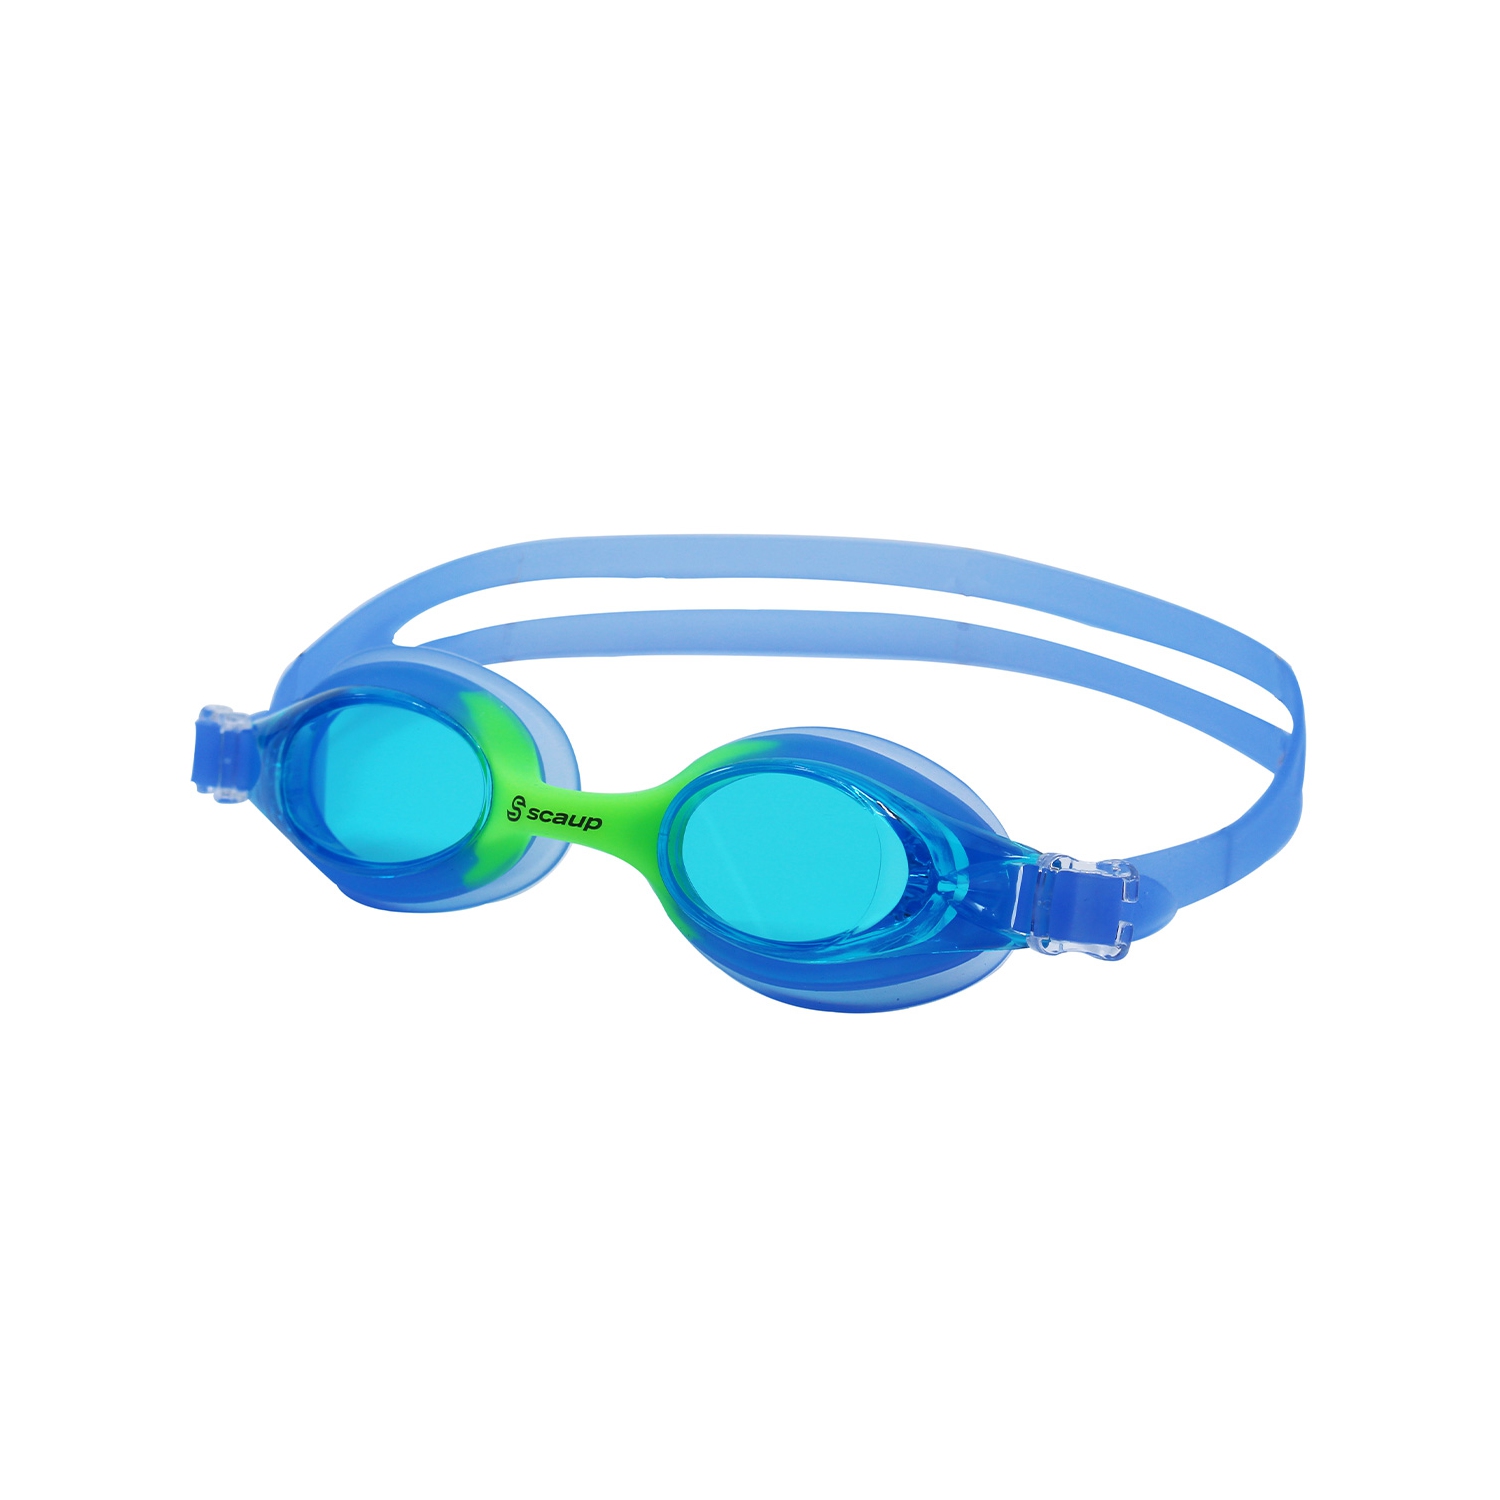 Scaup KAI Kids Swimming Goggles - Anti-Fog Recreational Swim Goggles with UV Protection, Blue